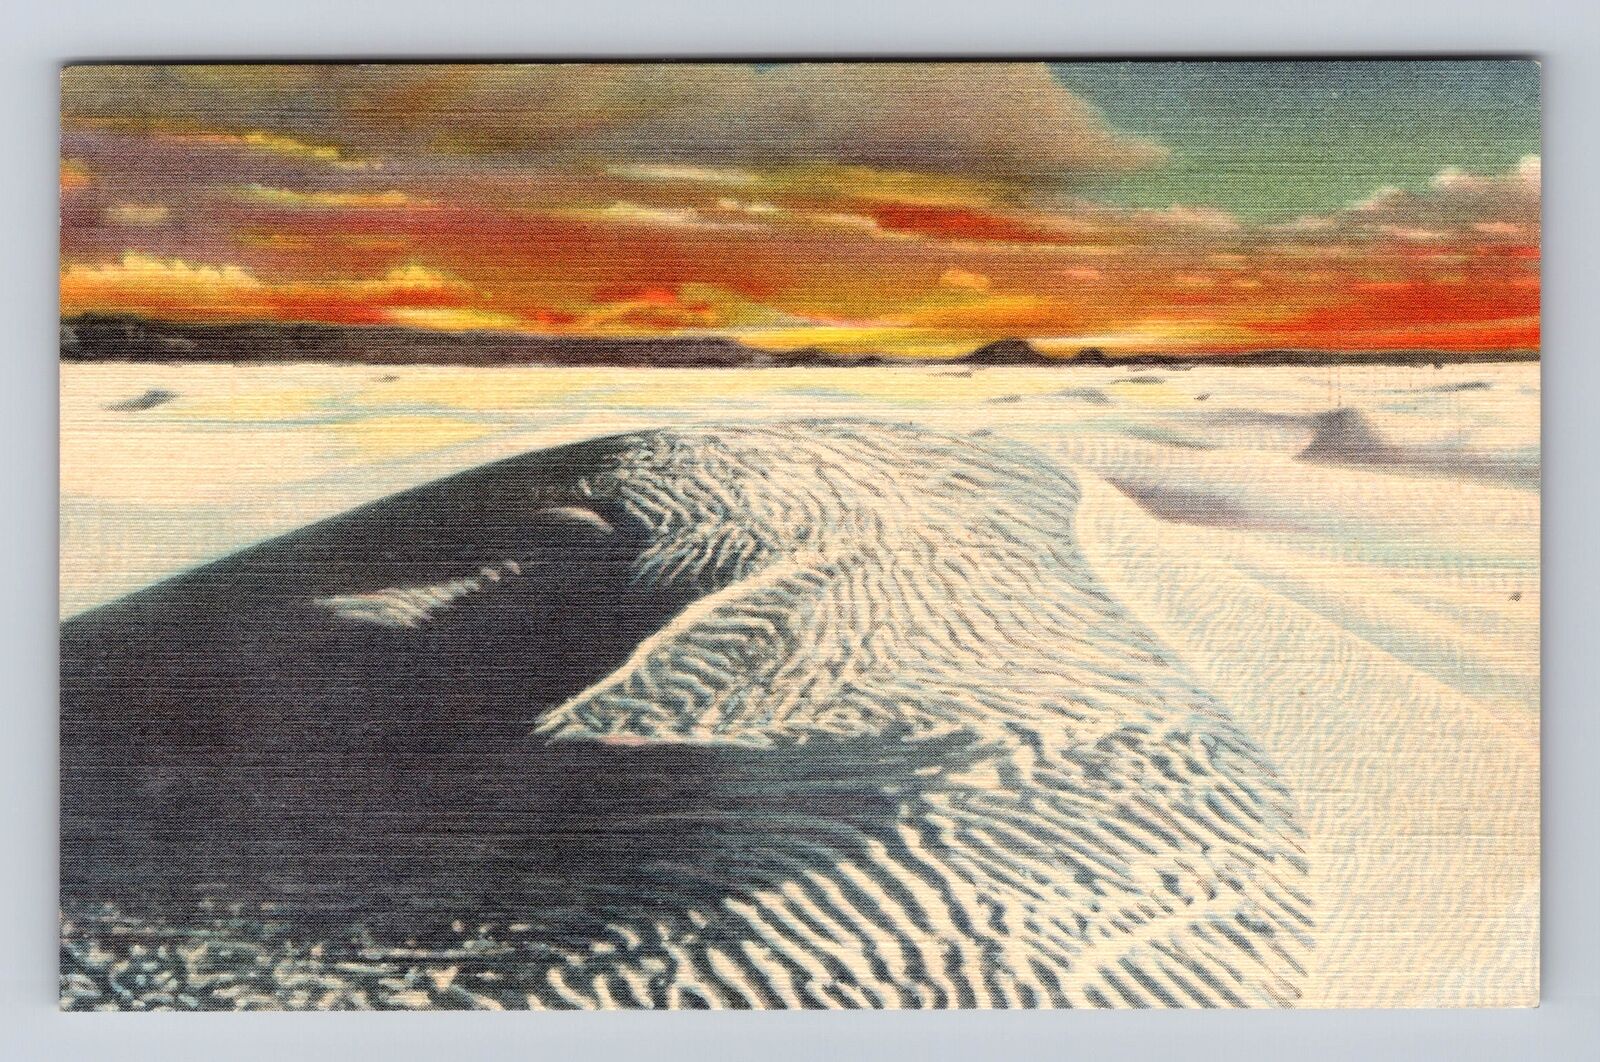 Alamogordo NM-New Mexico, Great White Sands At Sunset, Vintage Souvenir Postcard